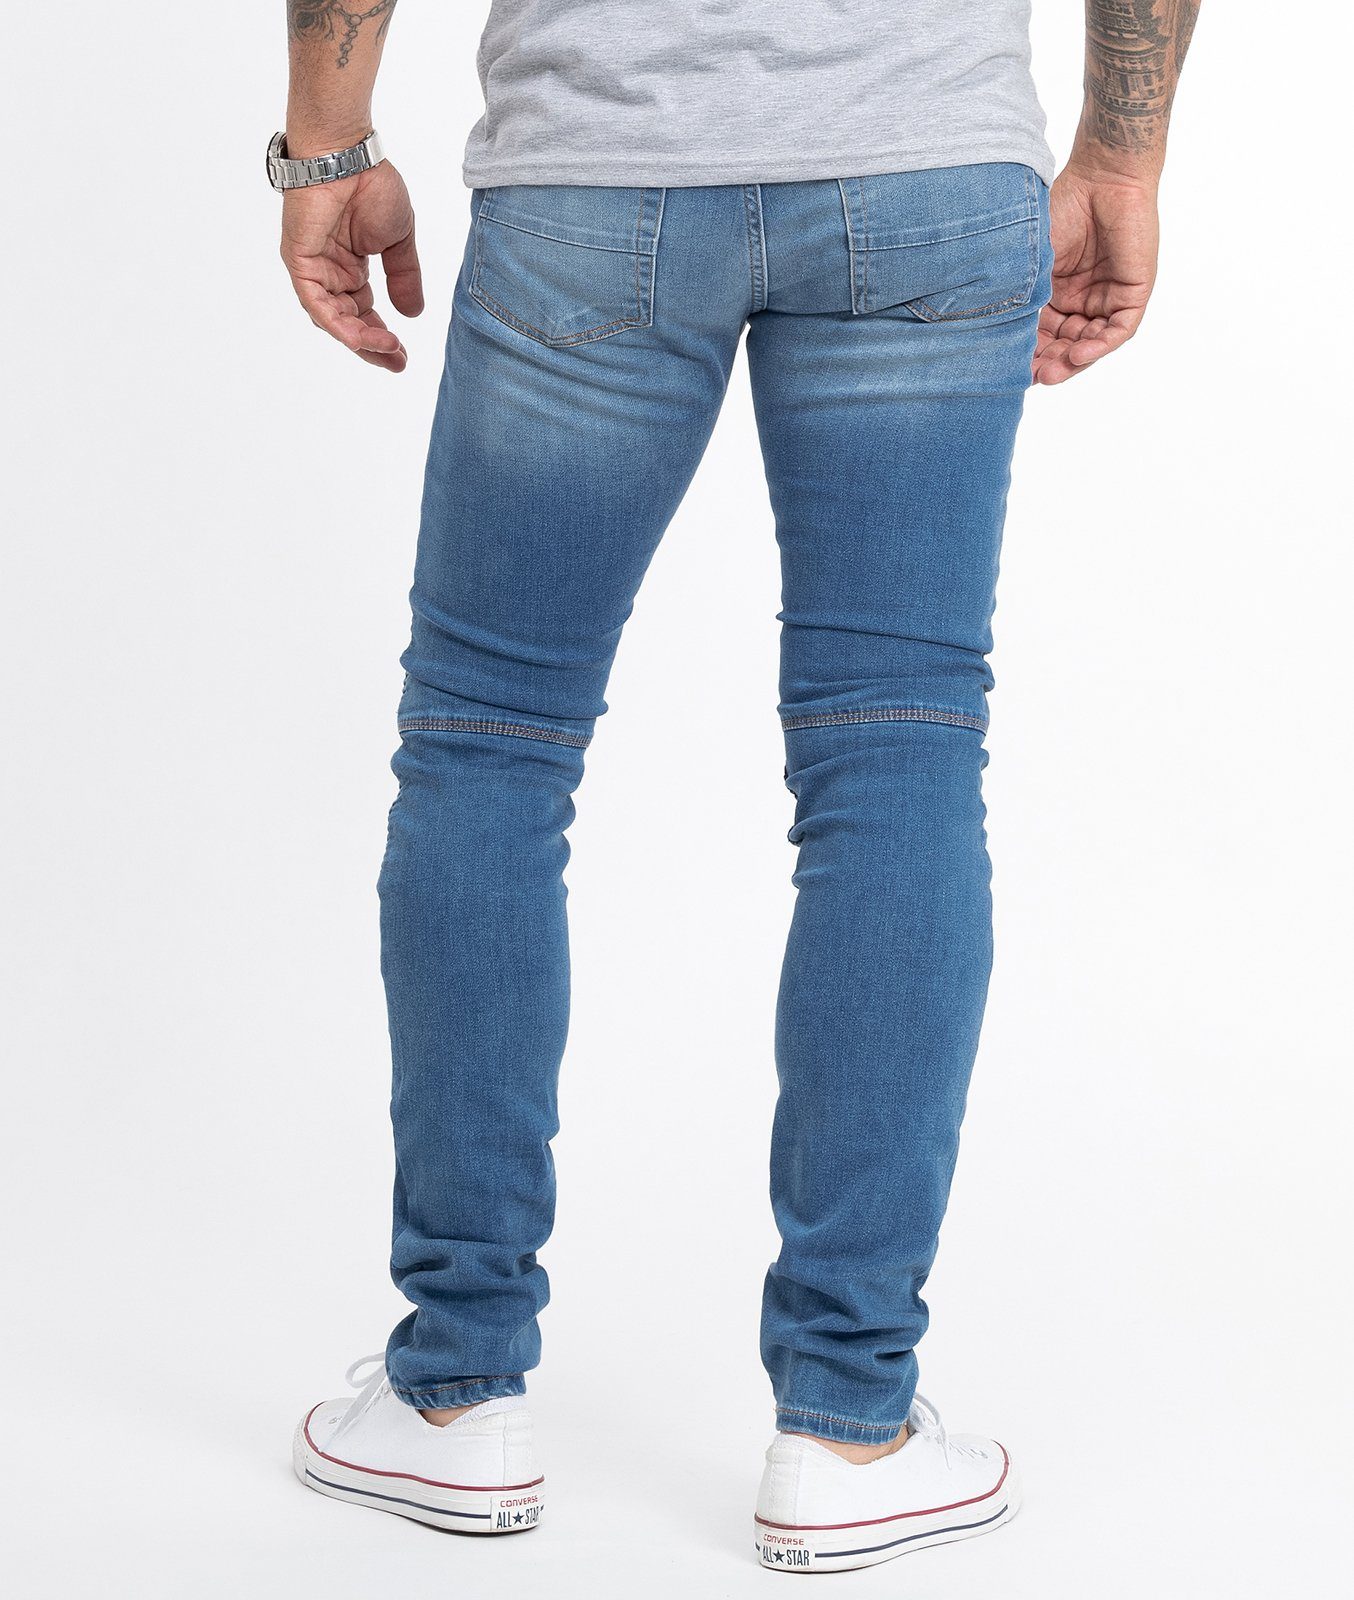 Herren Slim-fit-Jeans Blau Fit Rock Slim Biker-Style RC-2181 Jeans Creek